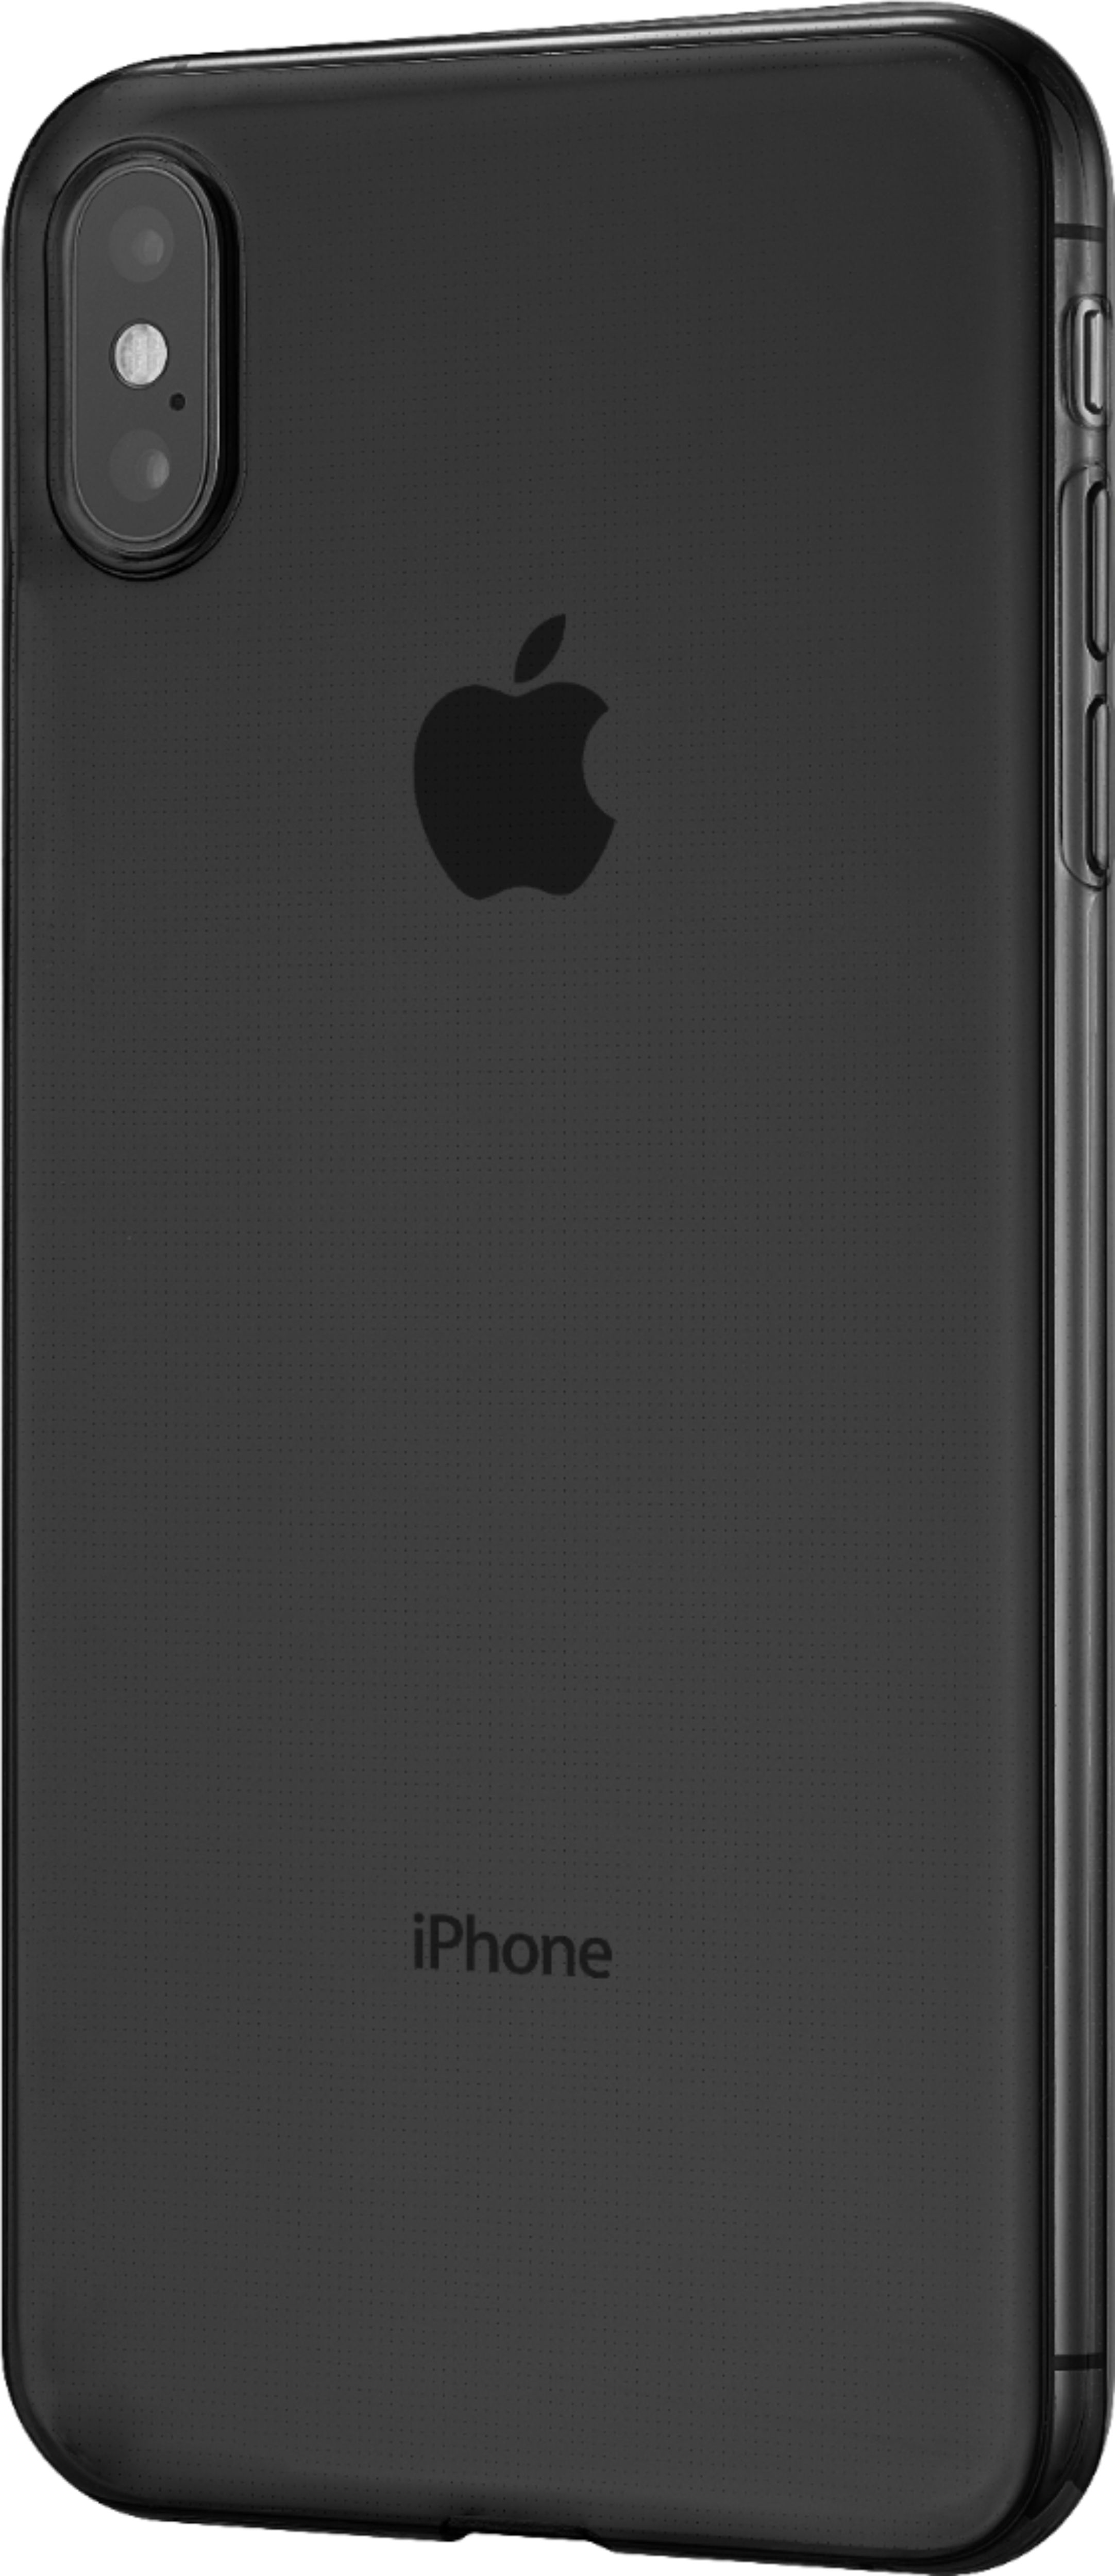 iPhone XS Max Clear Case Slim, Ultra Thin Transparent Grip Phone